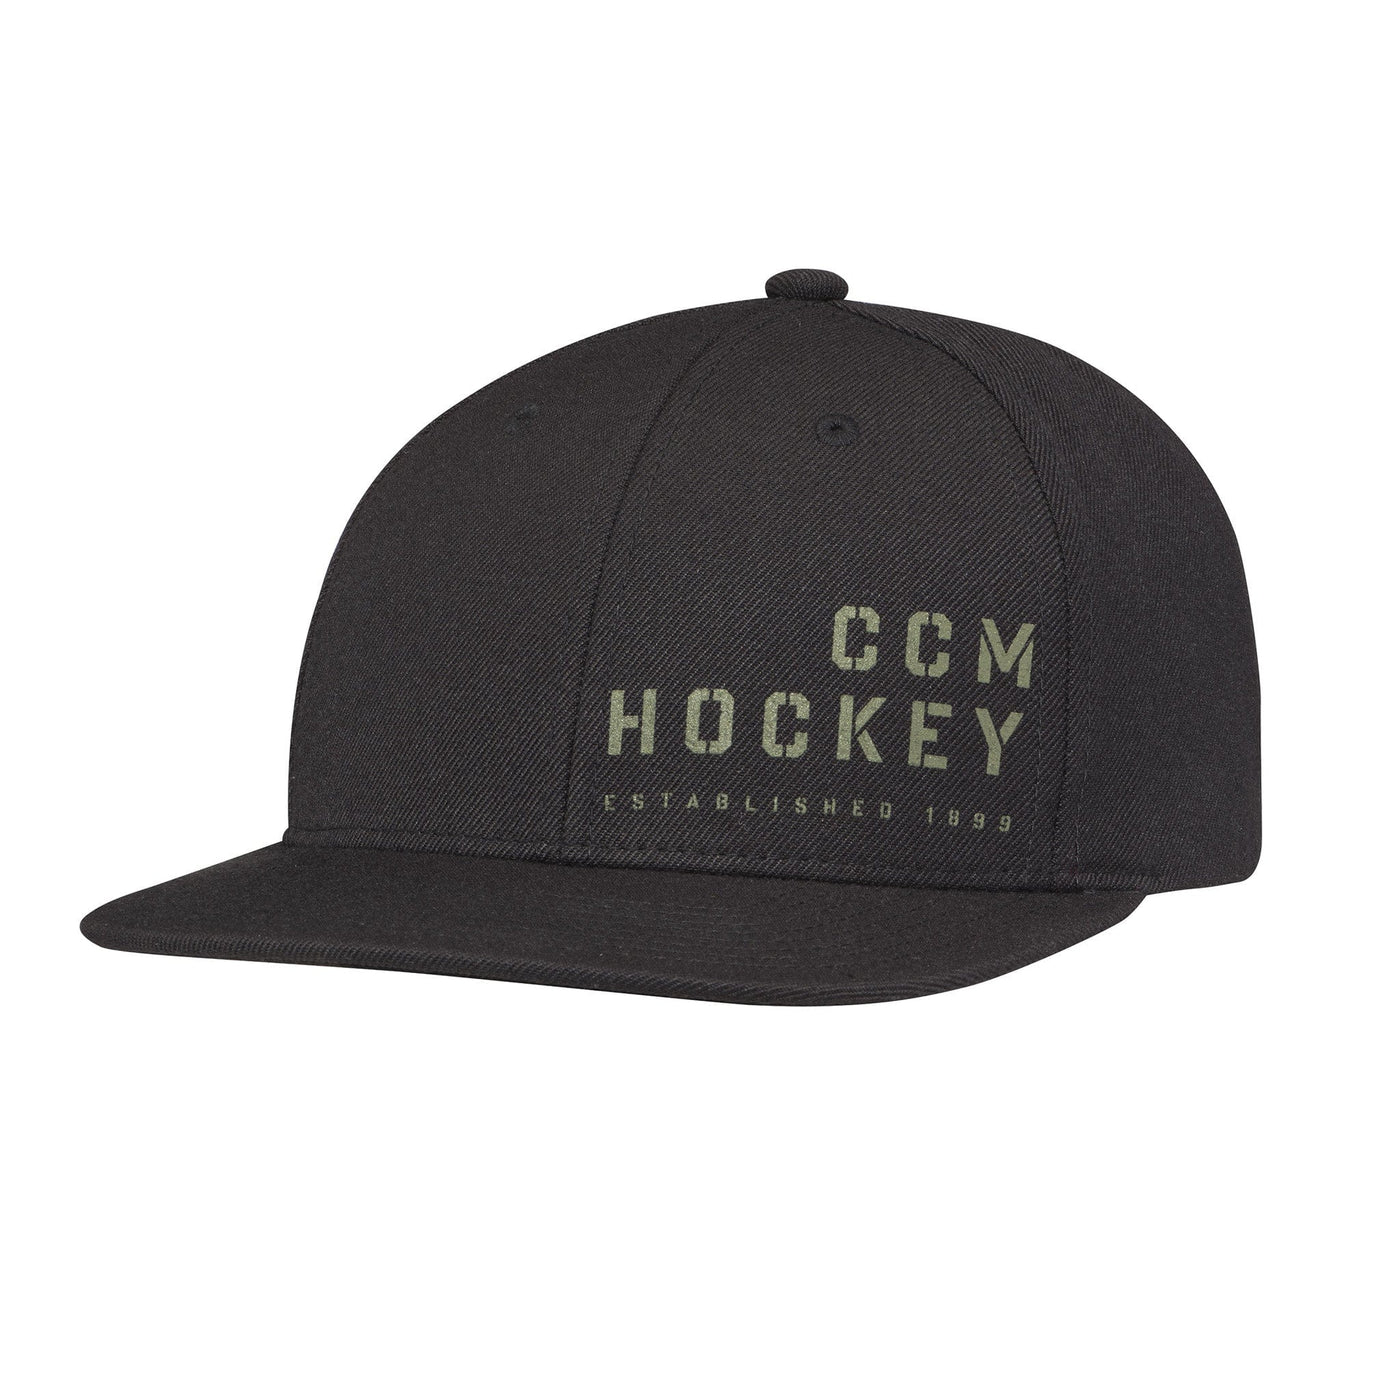 CCM Flatbrim Snapback Hat - The Hockey Shop Source For Sports